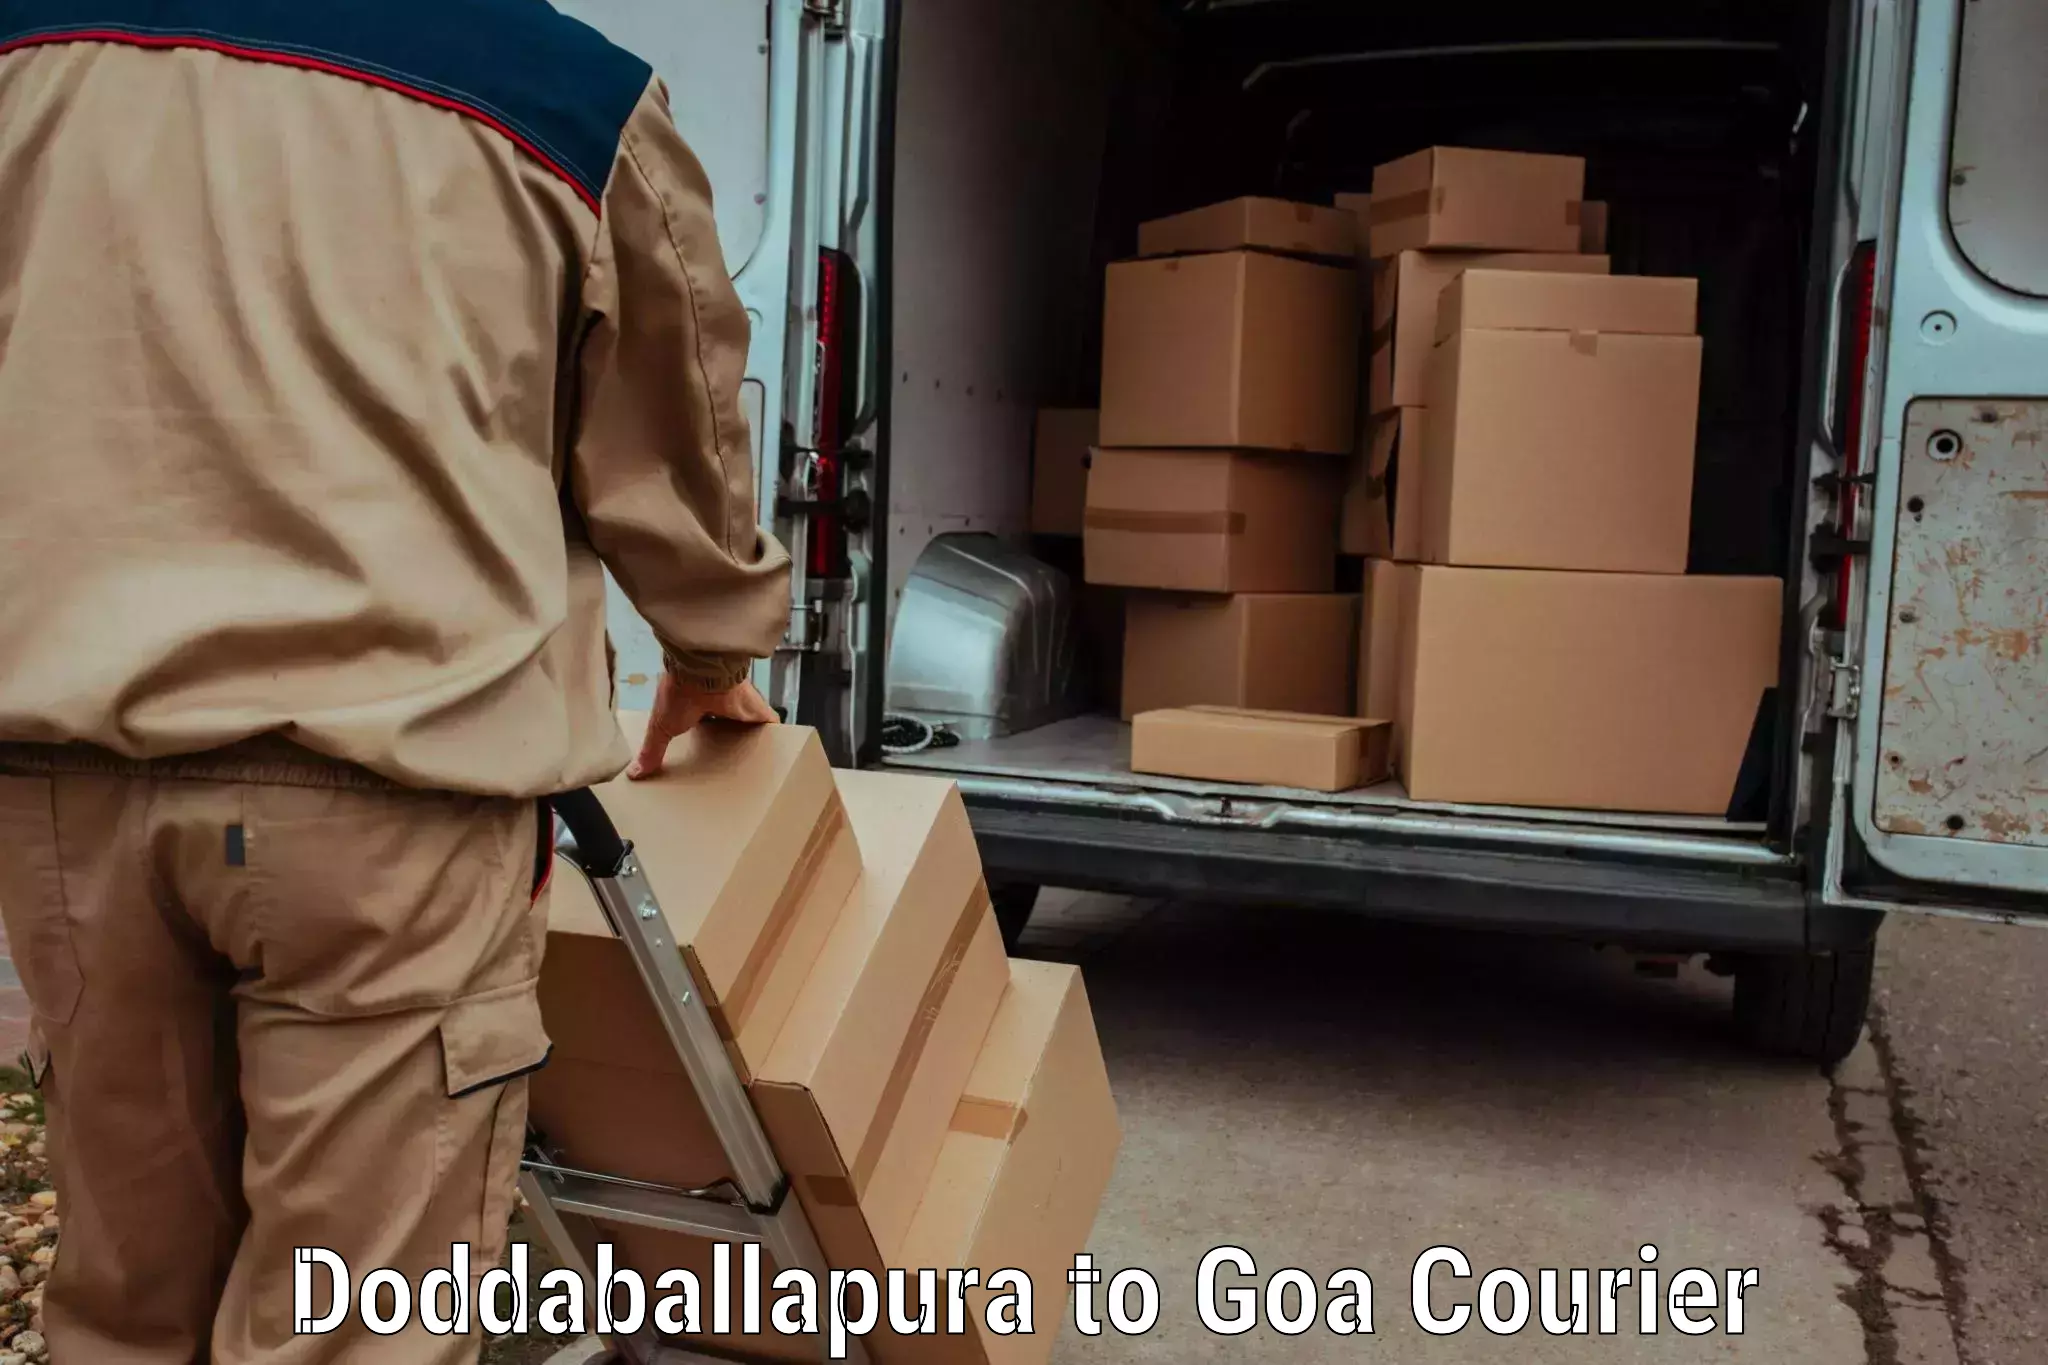 Global courier networks Doddaballapura to South Goa